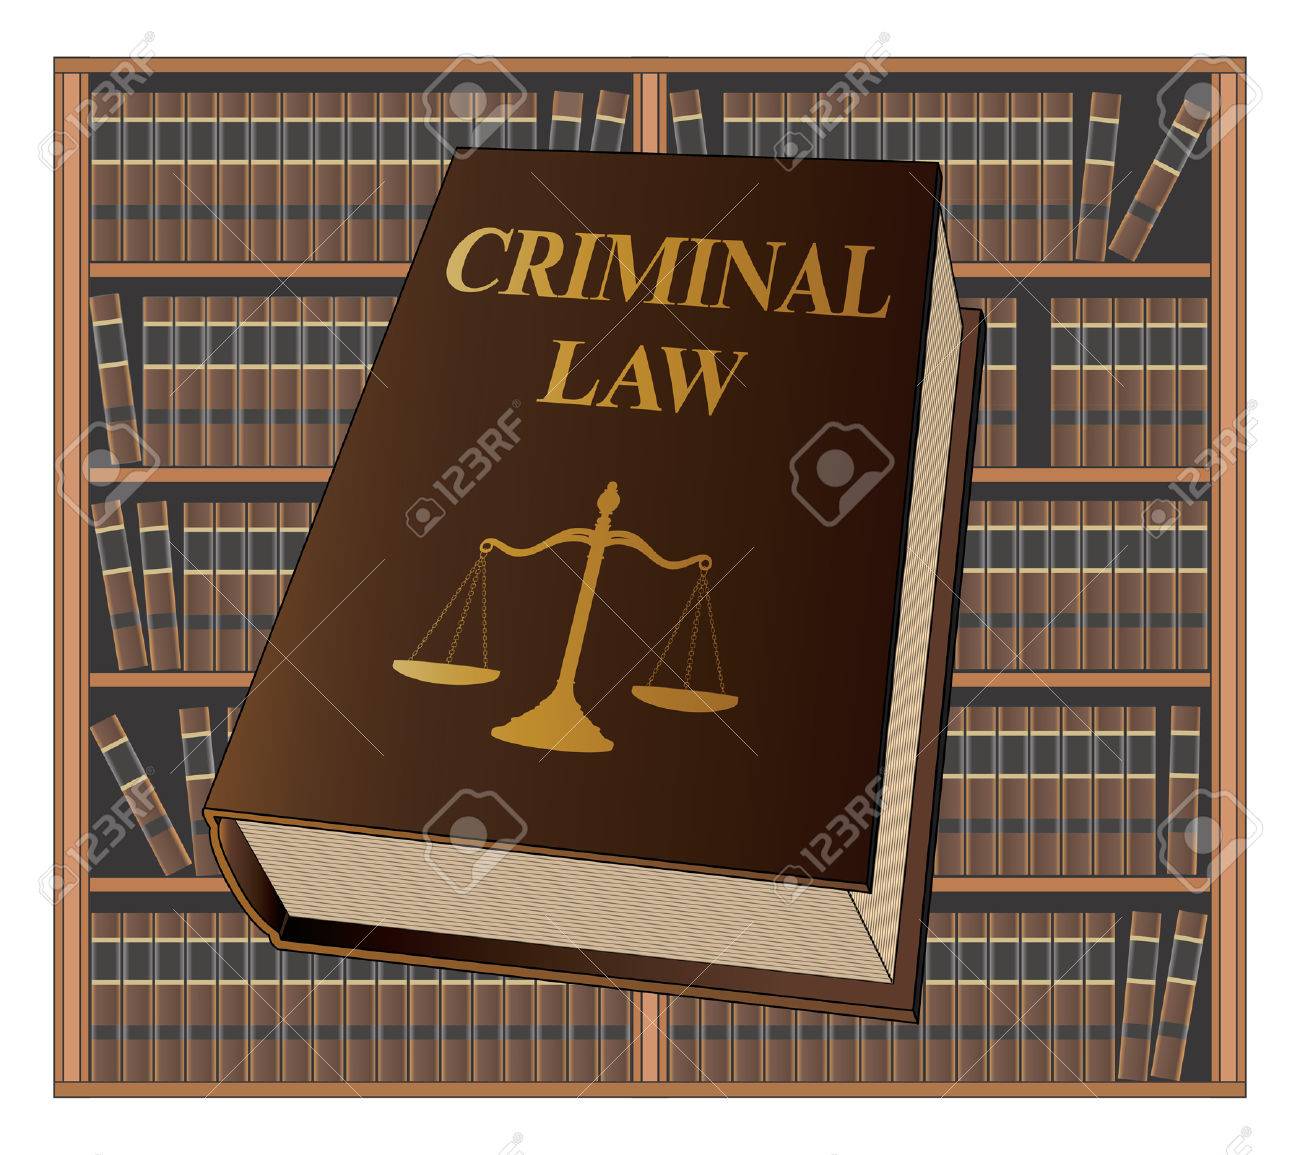 criminal_law_book.jpg